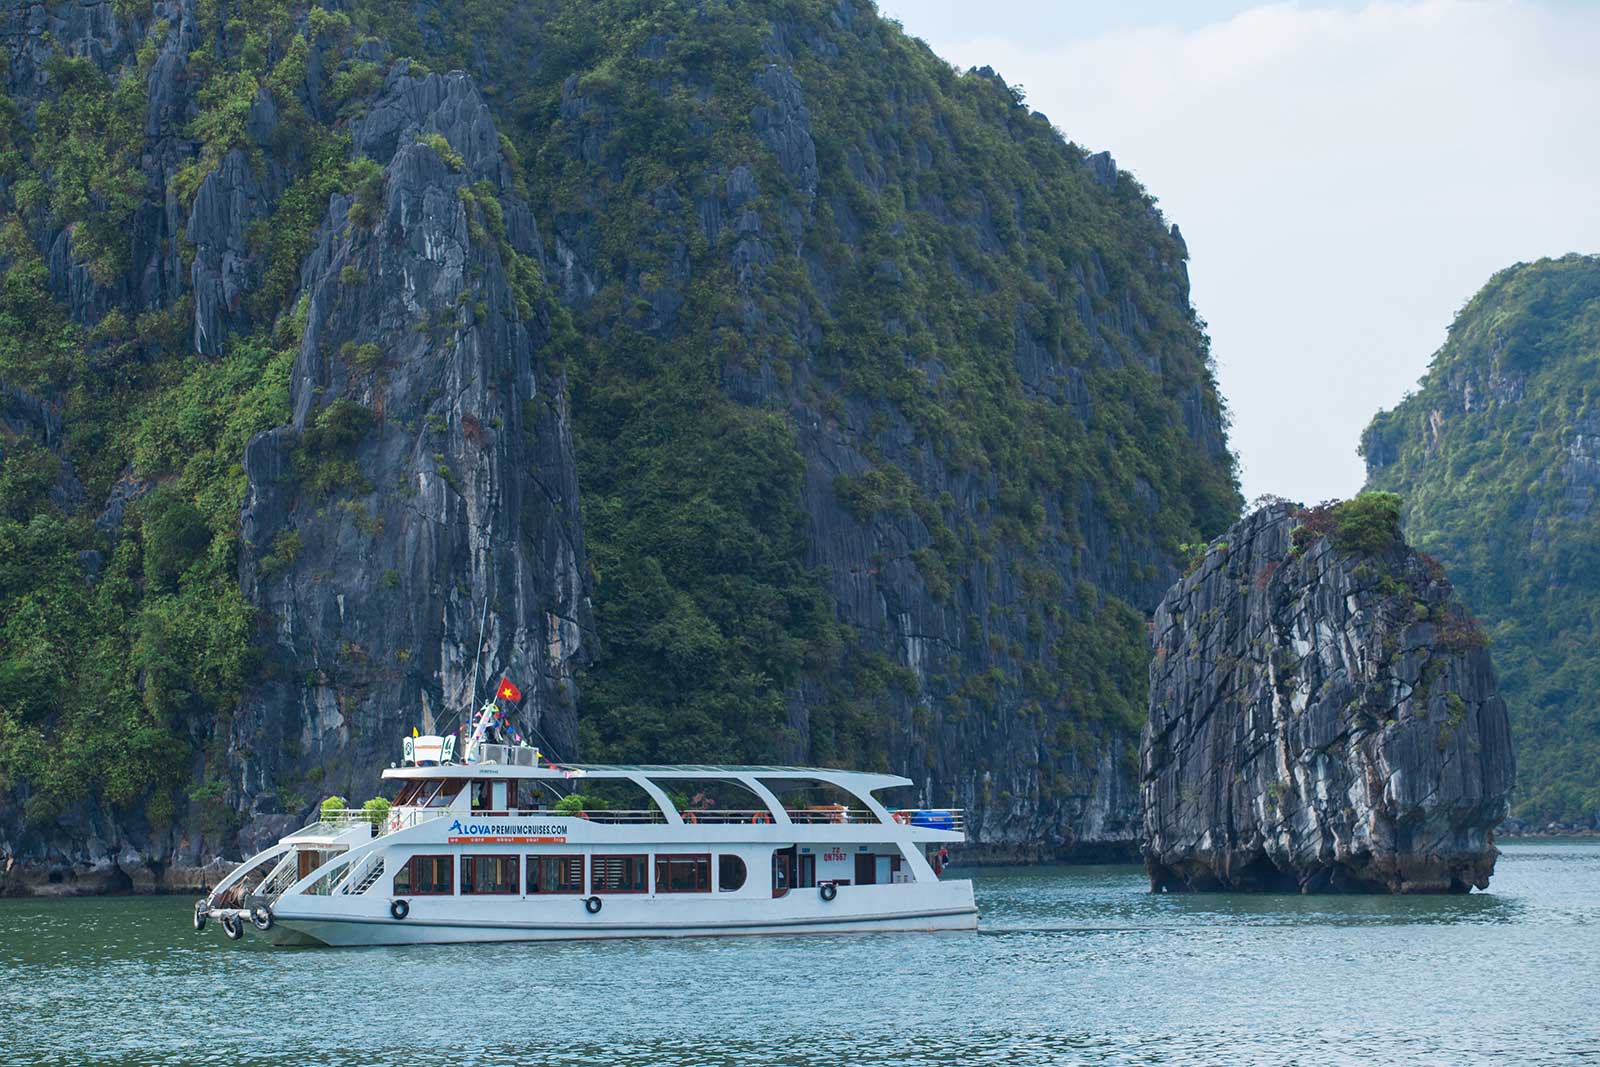 Halong bay cruise full day tour